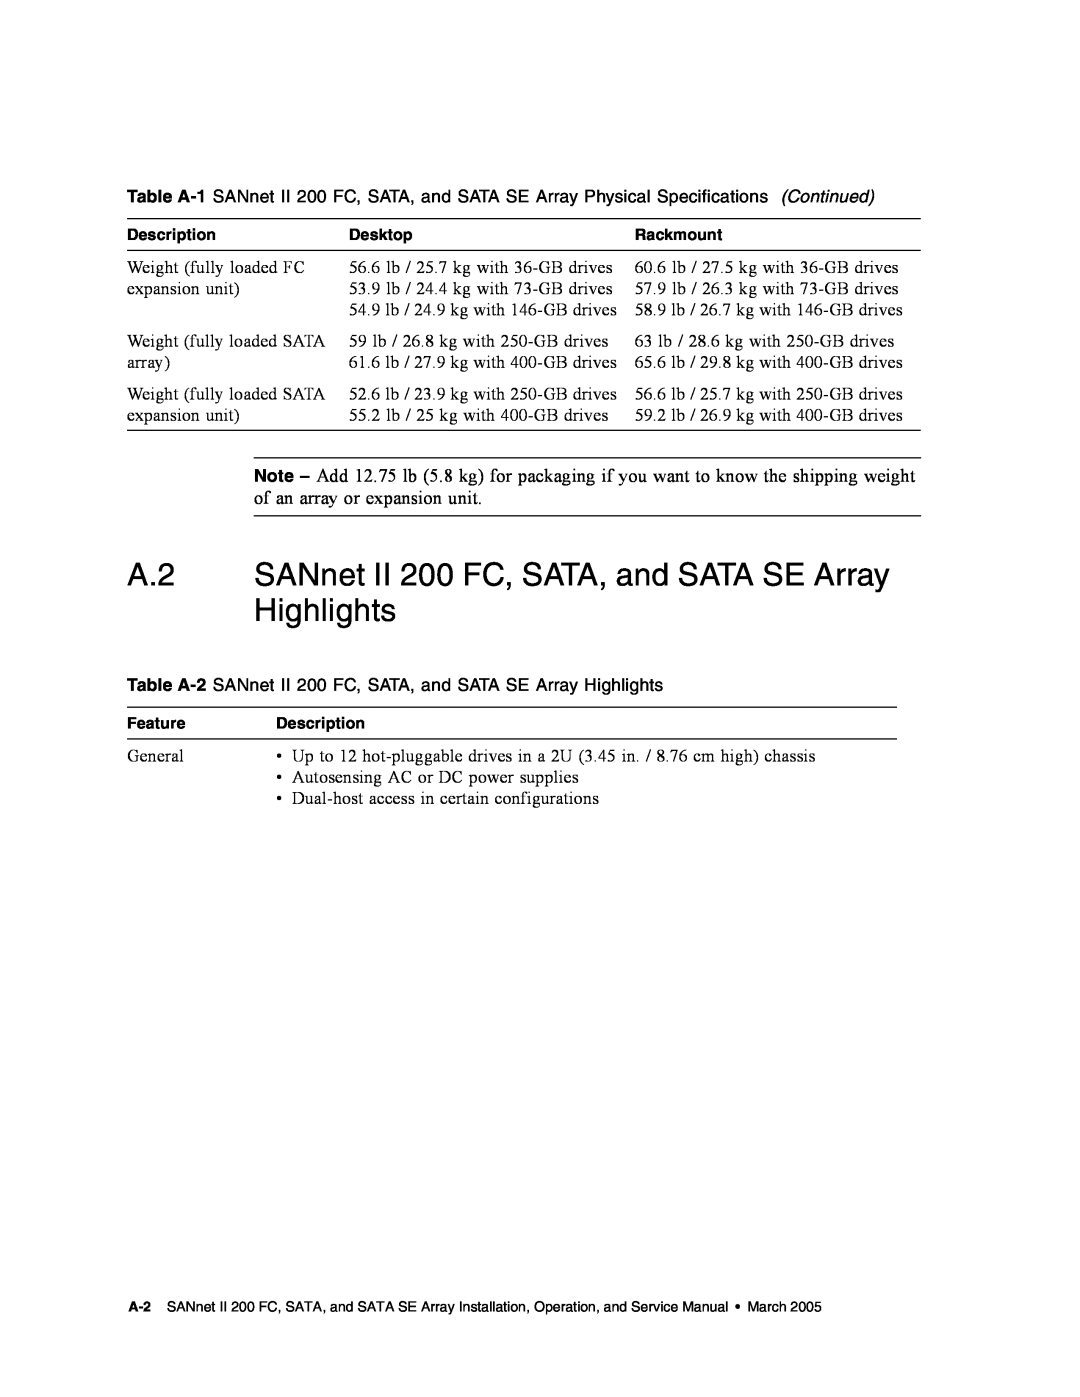 Dot Hill Systems service manual A.2 SANnet II 200 FC, SATA, and SATA SE Array Highlights 